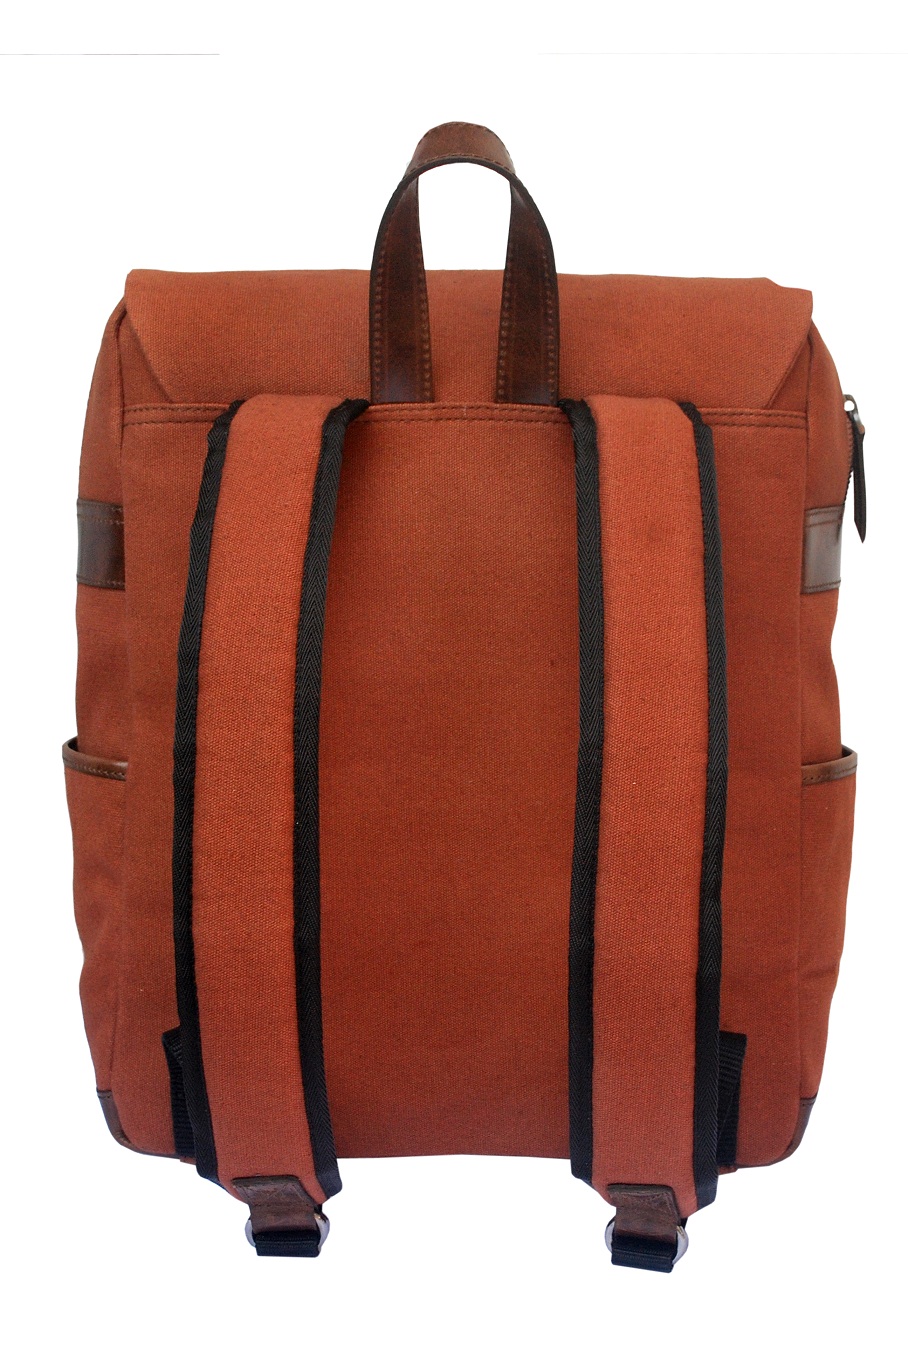 Canvas Leather Lightweight Unisex Travel Casual Messenger Backpack 18Backpack | eBay